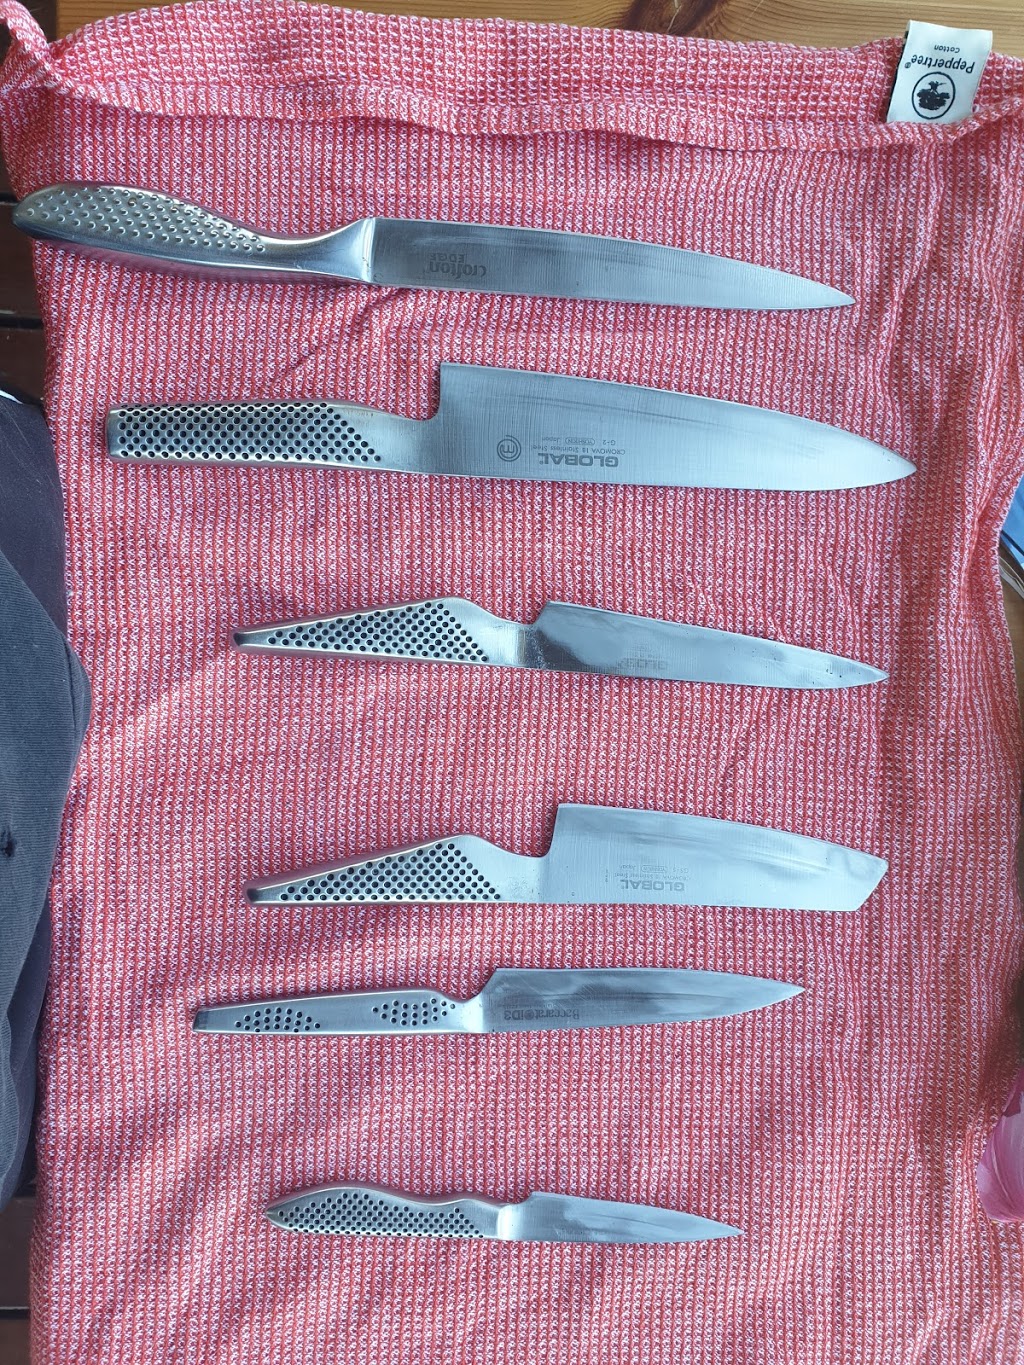 For A Better Cut - Knife Sharpening |  | 584 Valdora Rd, Valdora QLD 4561, Australia | 0458736430 OR +61 458 736 430